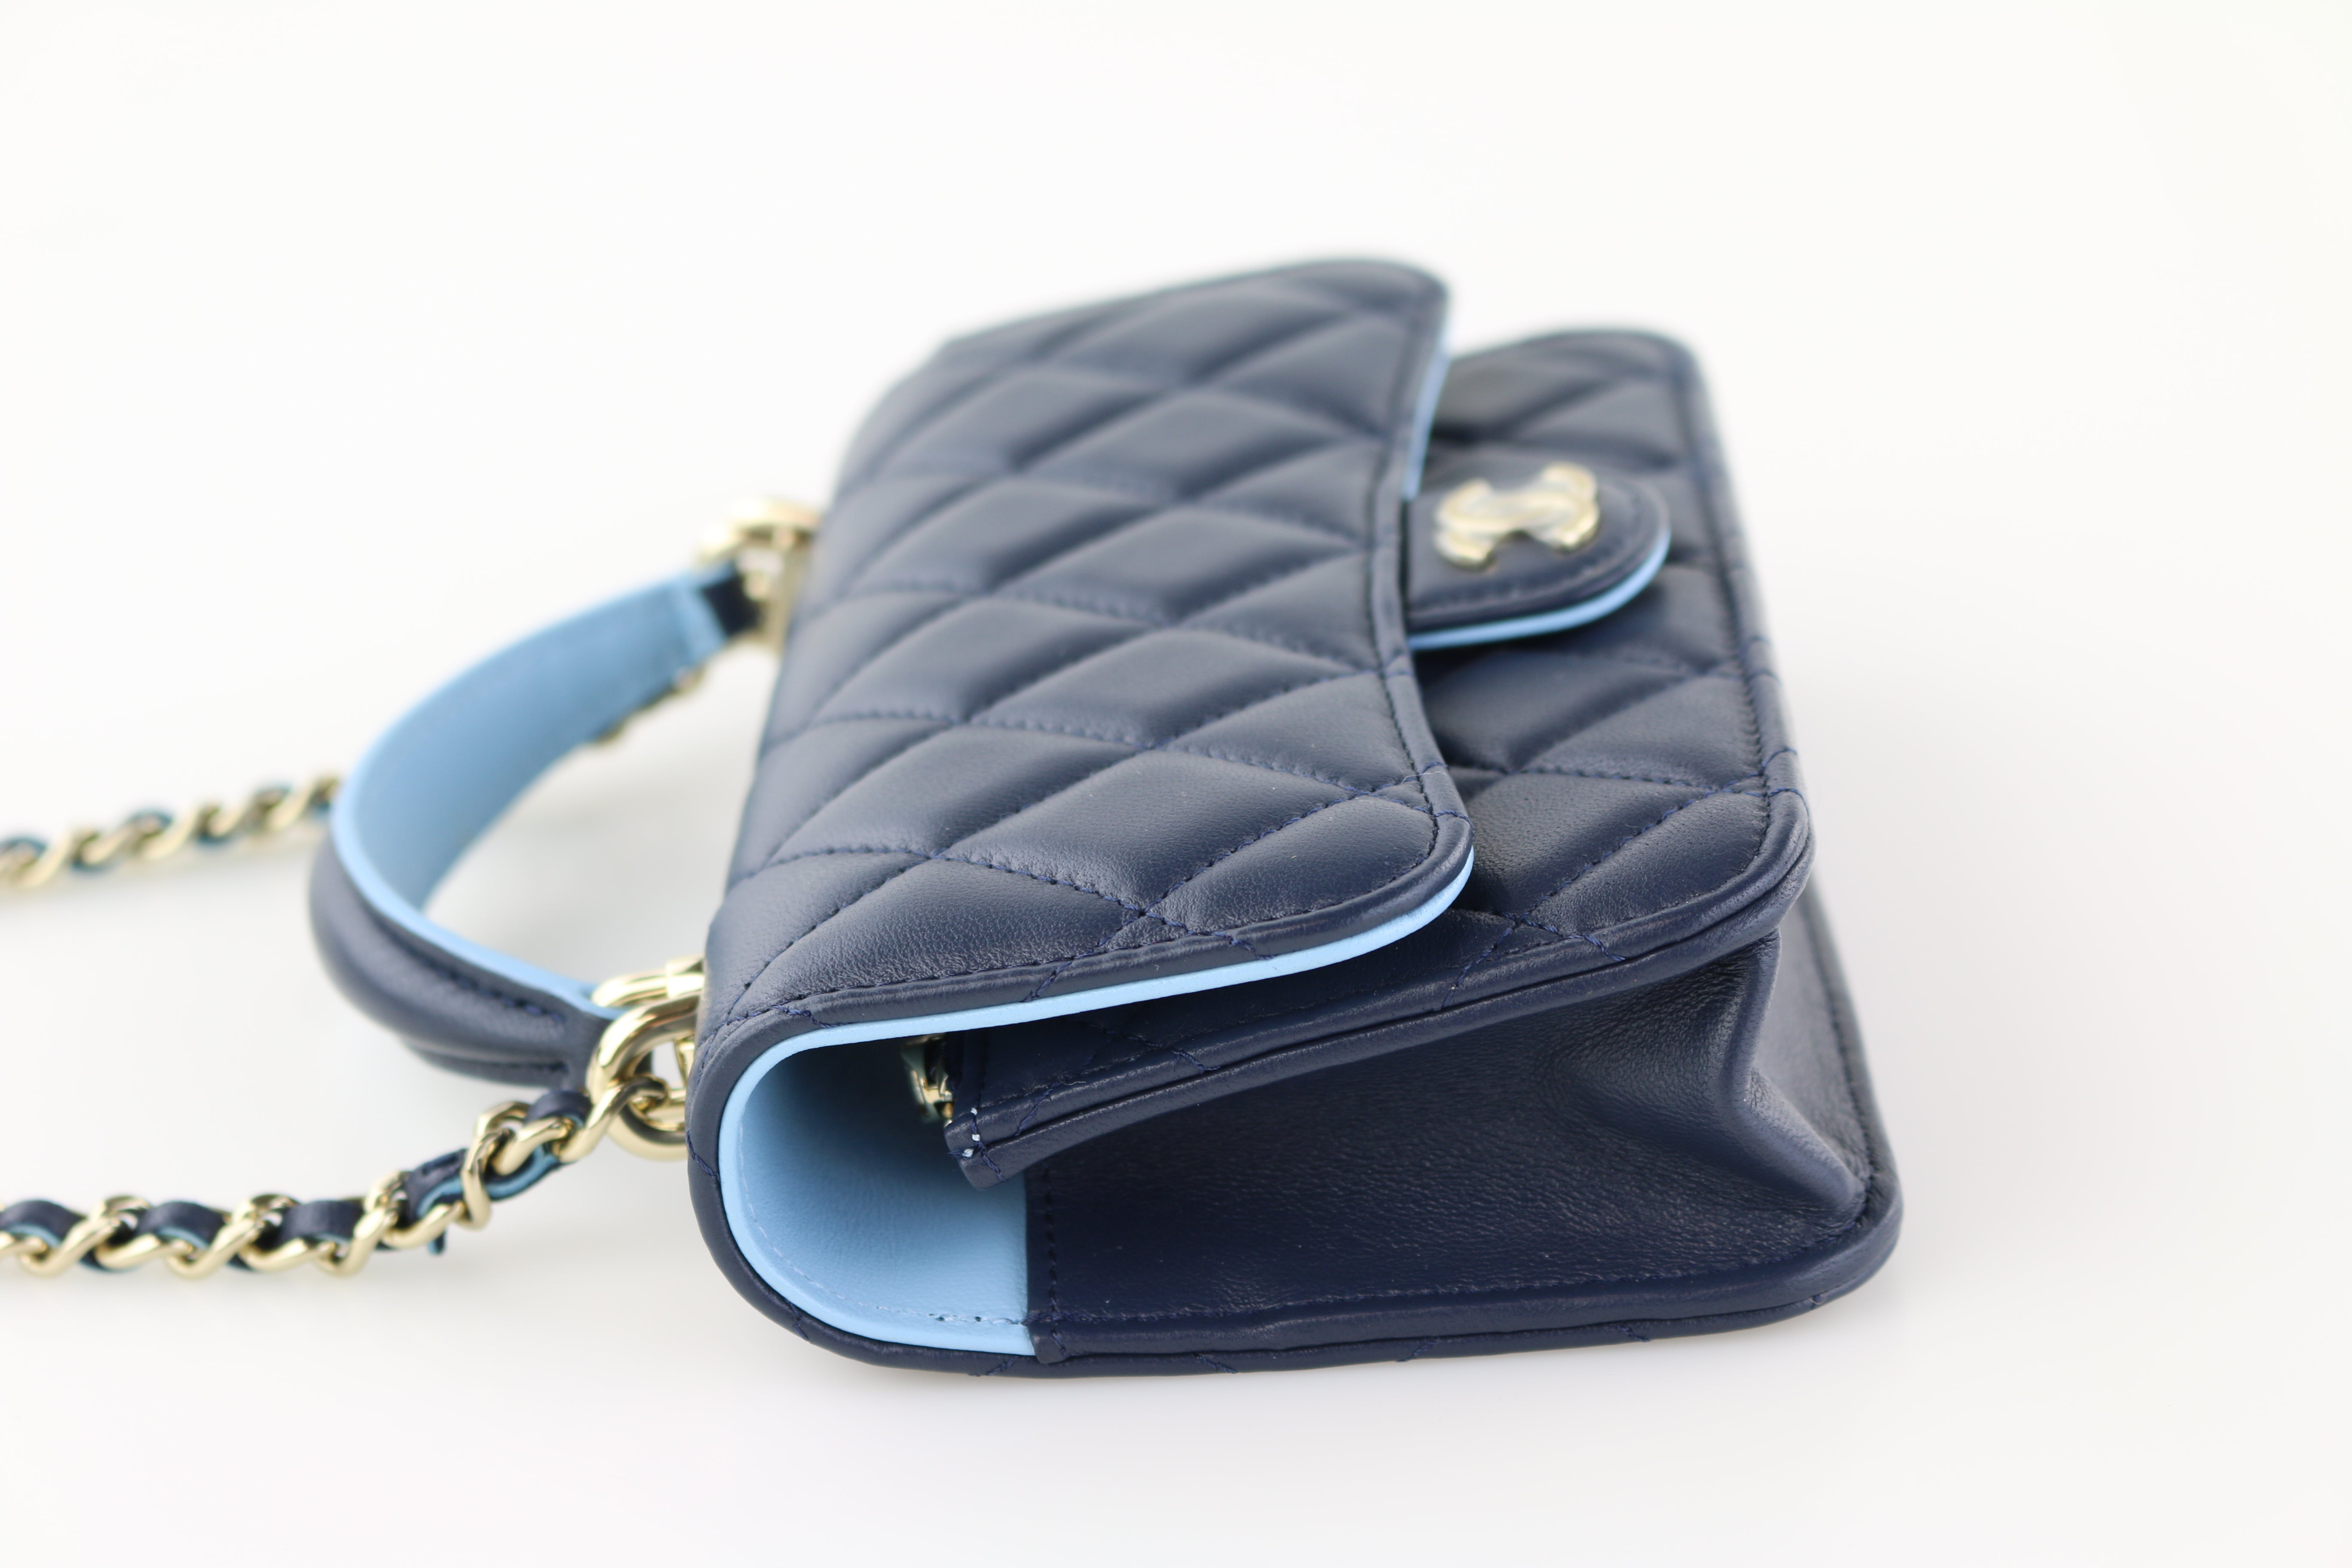 Leather Crossbody Phone bag for Women